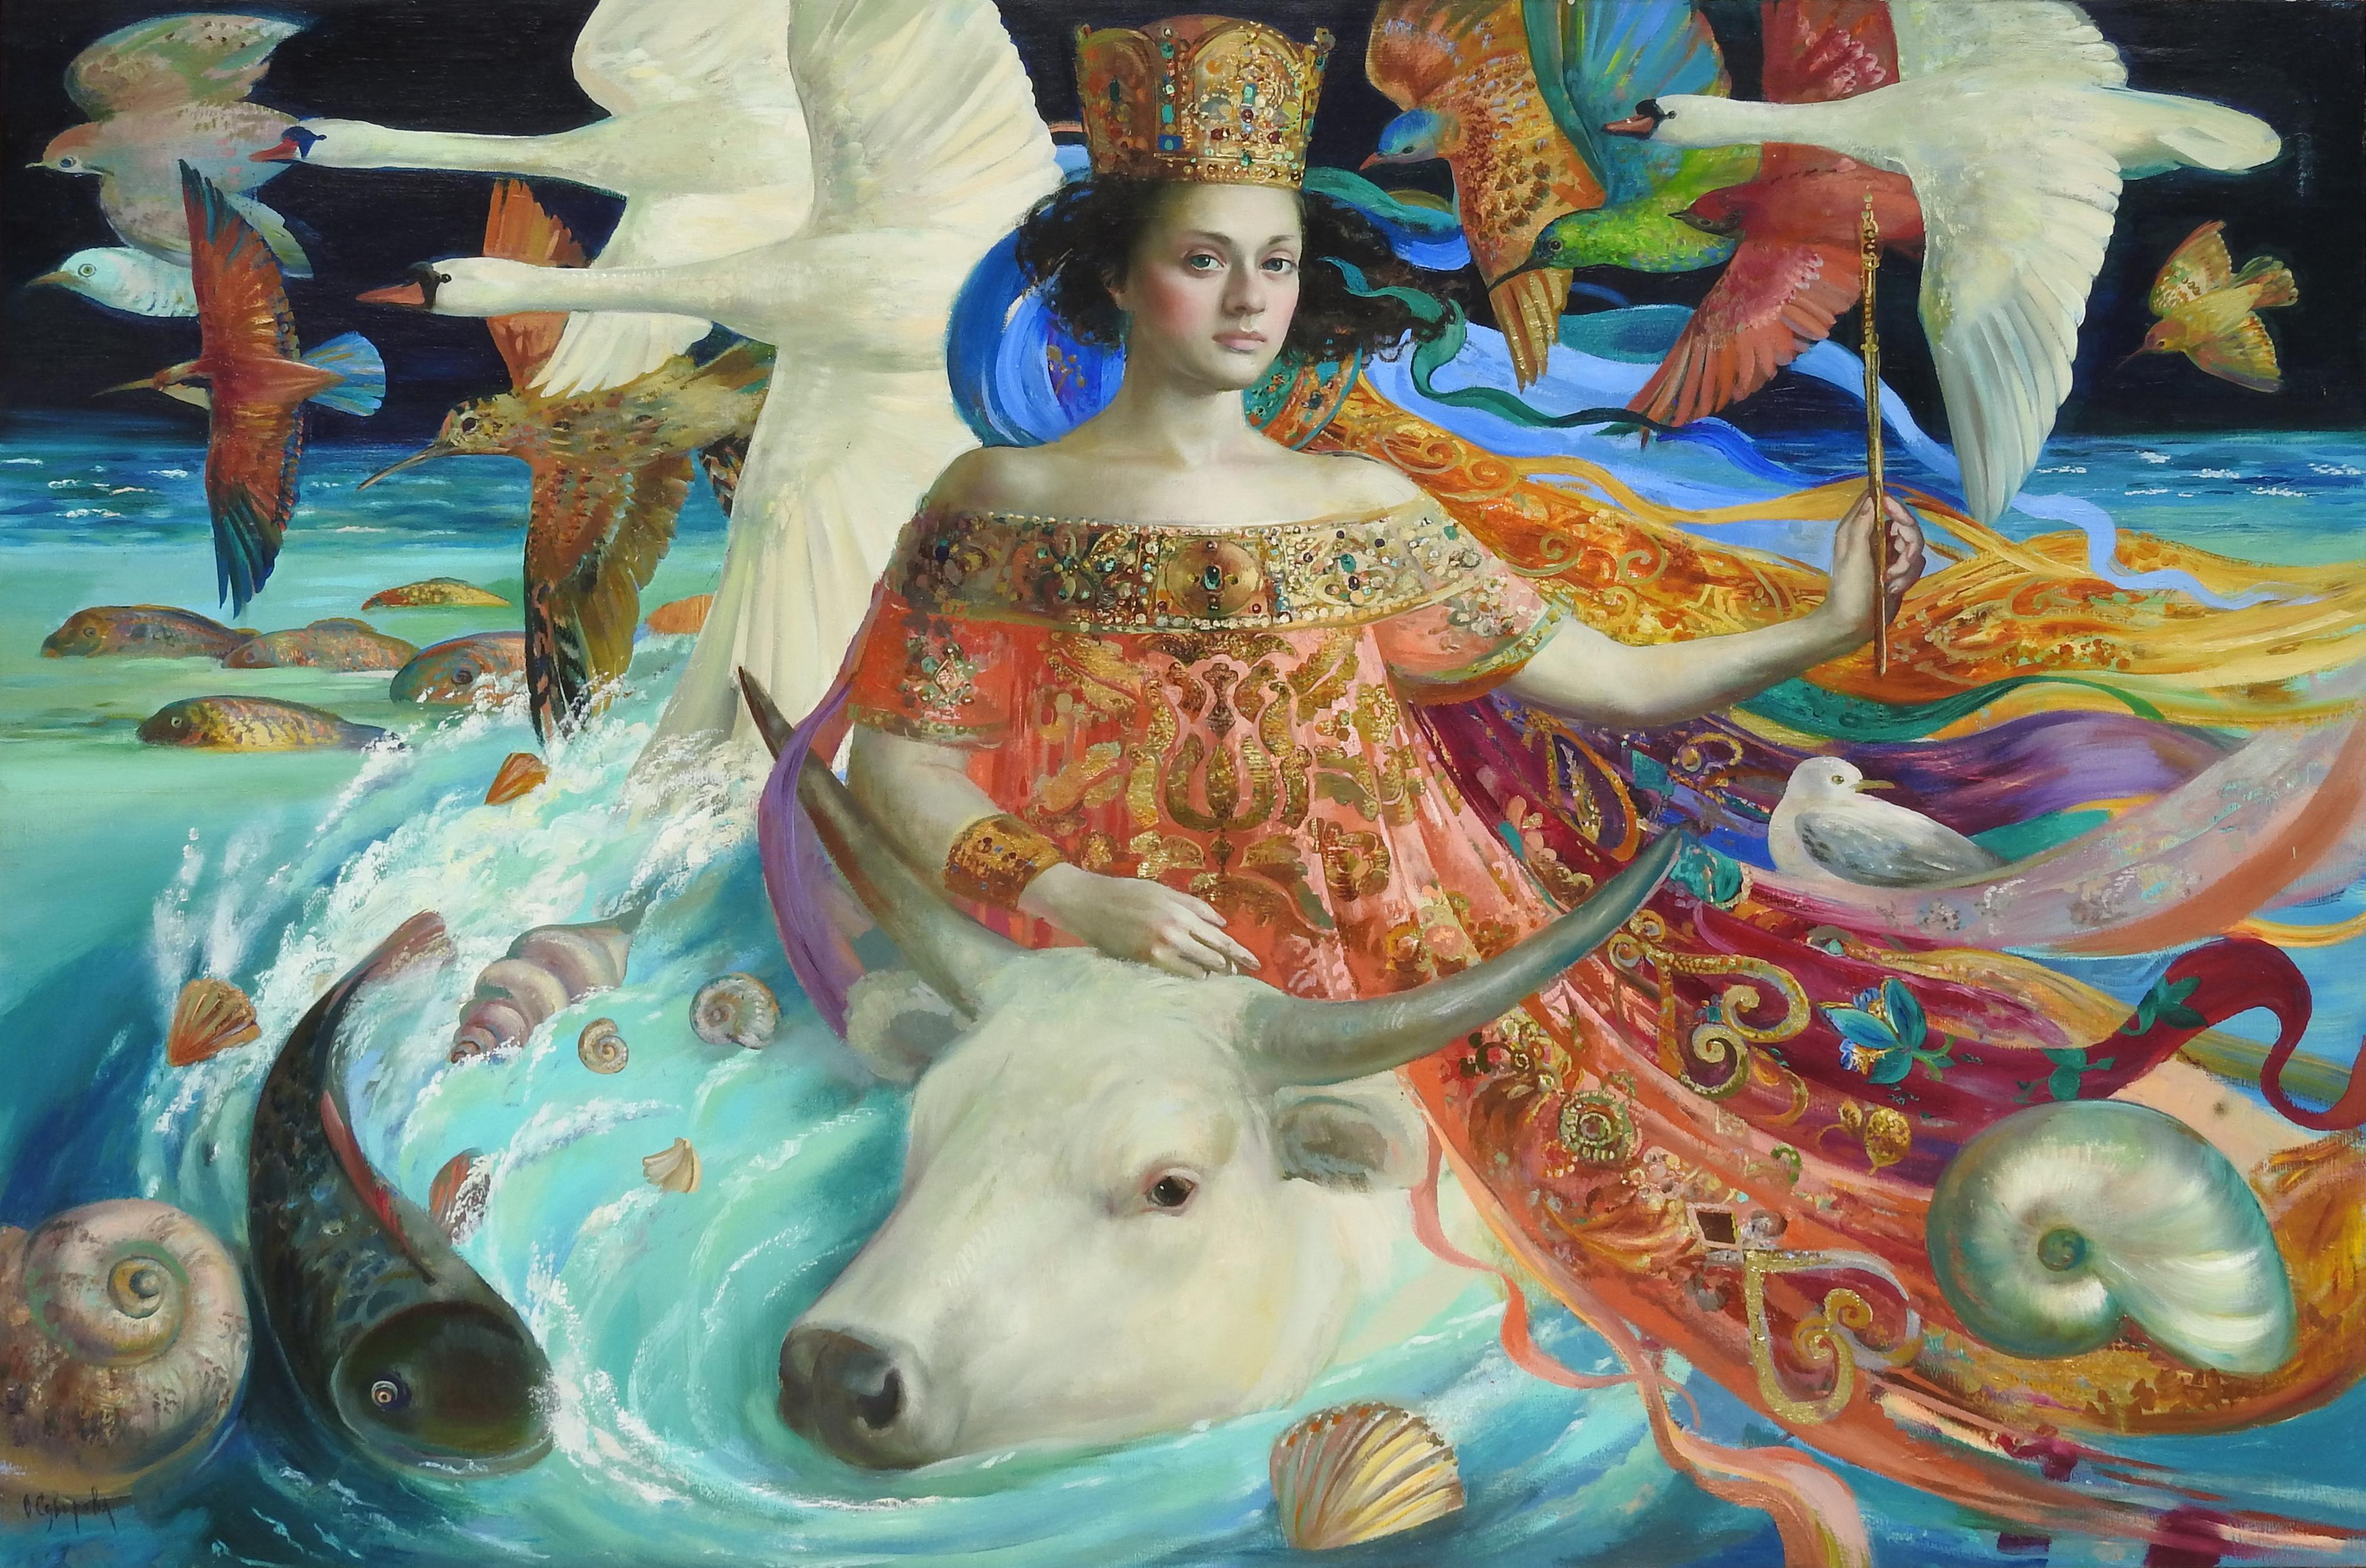 Olga Suvorava Figurative Painting - "Abduction of Europa", Olga Suvorova, Oil on Canvas, 36x53 in., Fantasy Realism